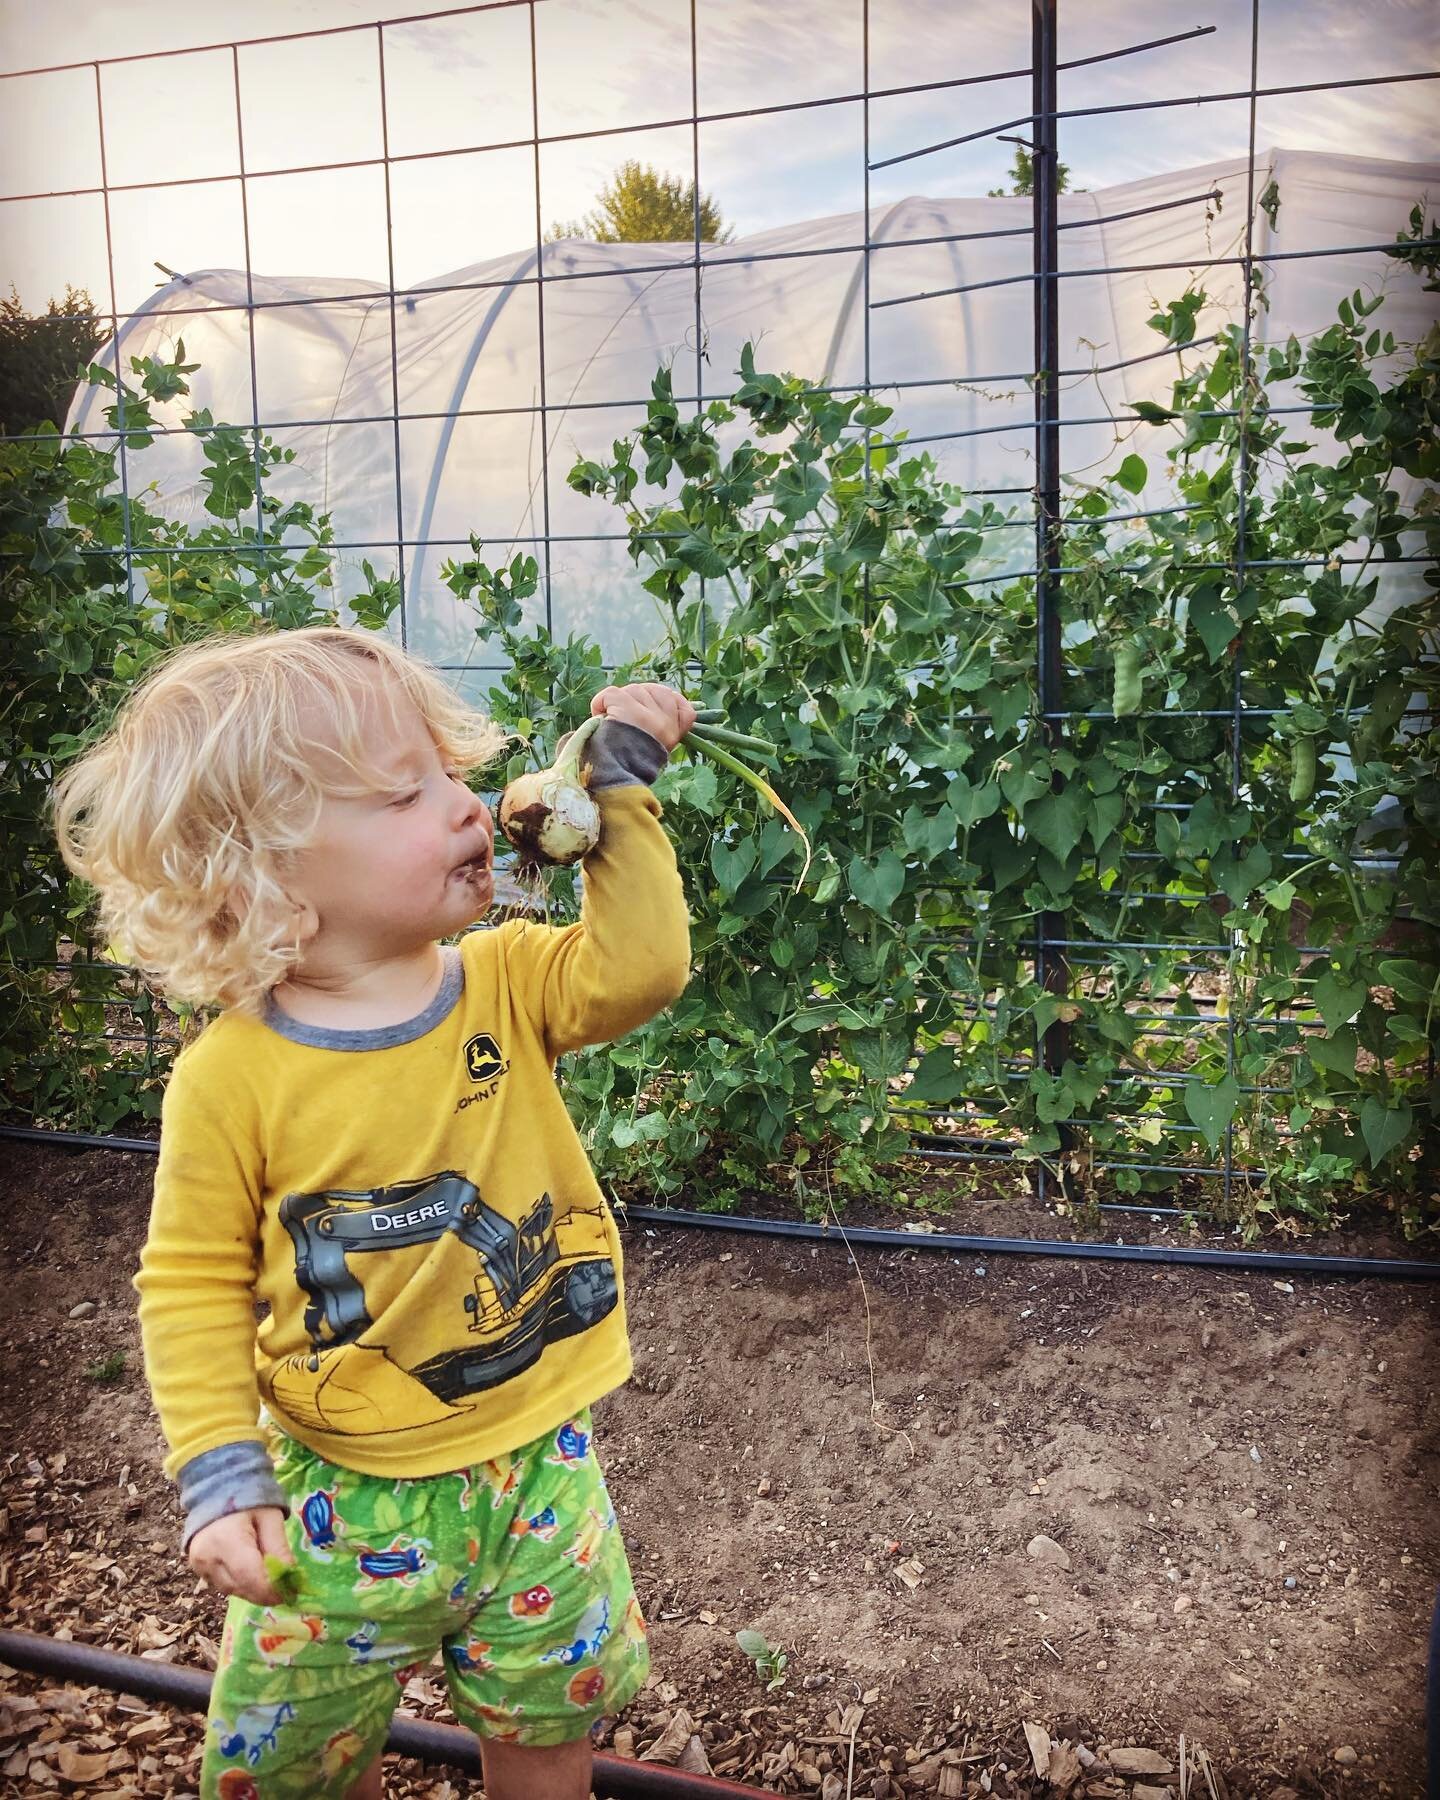 Stop and smell the onions 

🧅❤️🧅

#toddlergardener
#werenotreadybutohwell
#gardeningwithkids
#wallawallasweetionions
#halfacrehomestead
#organicgardening
#vegetablegardening